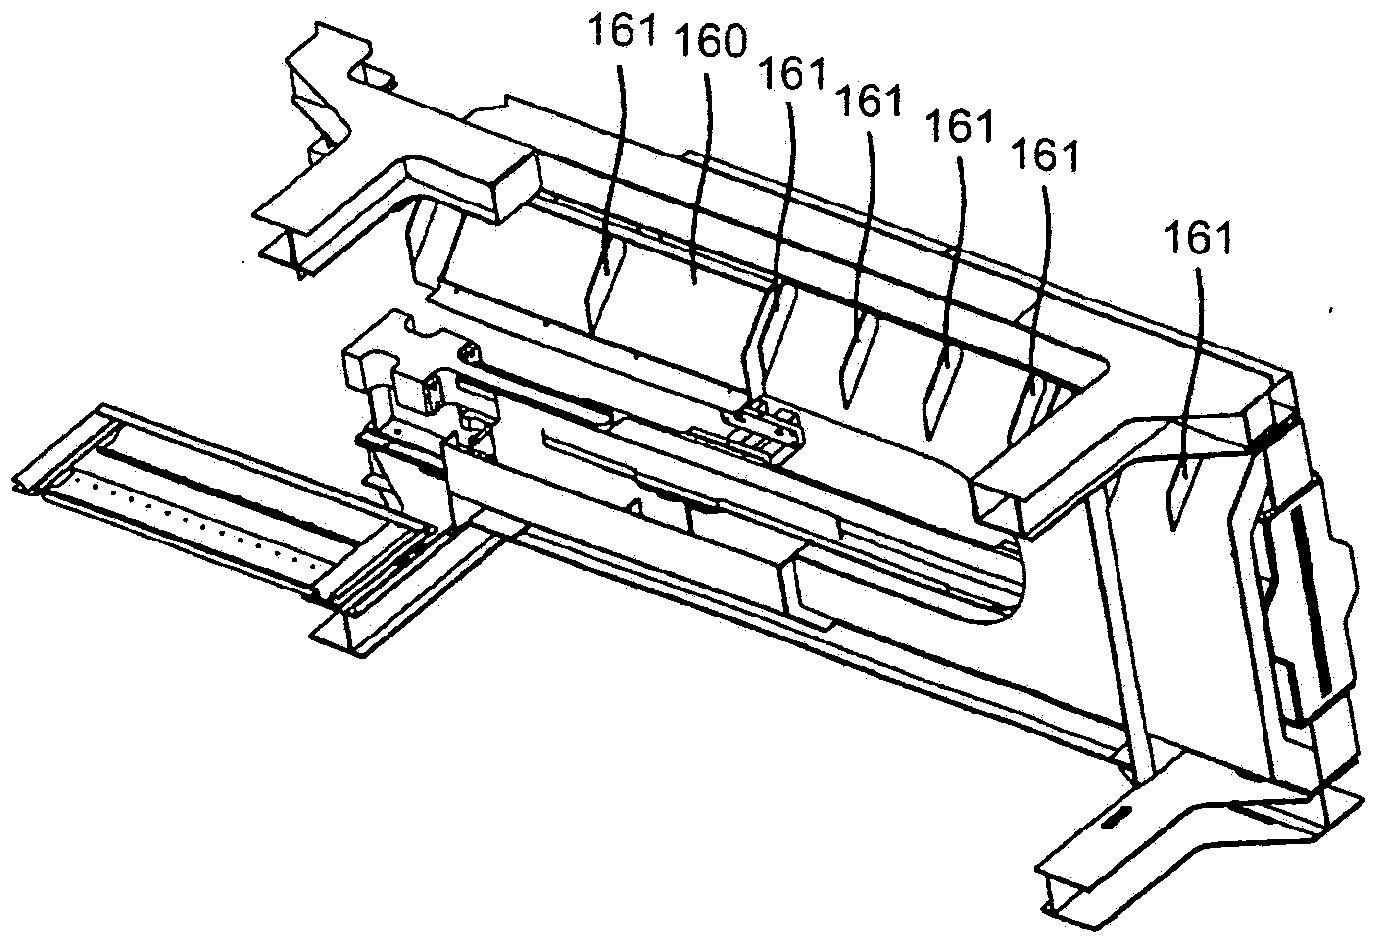 Machine frame for high-pressure roller press